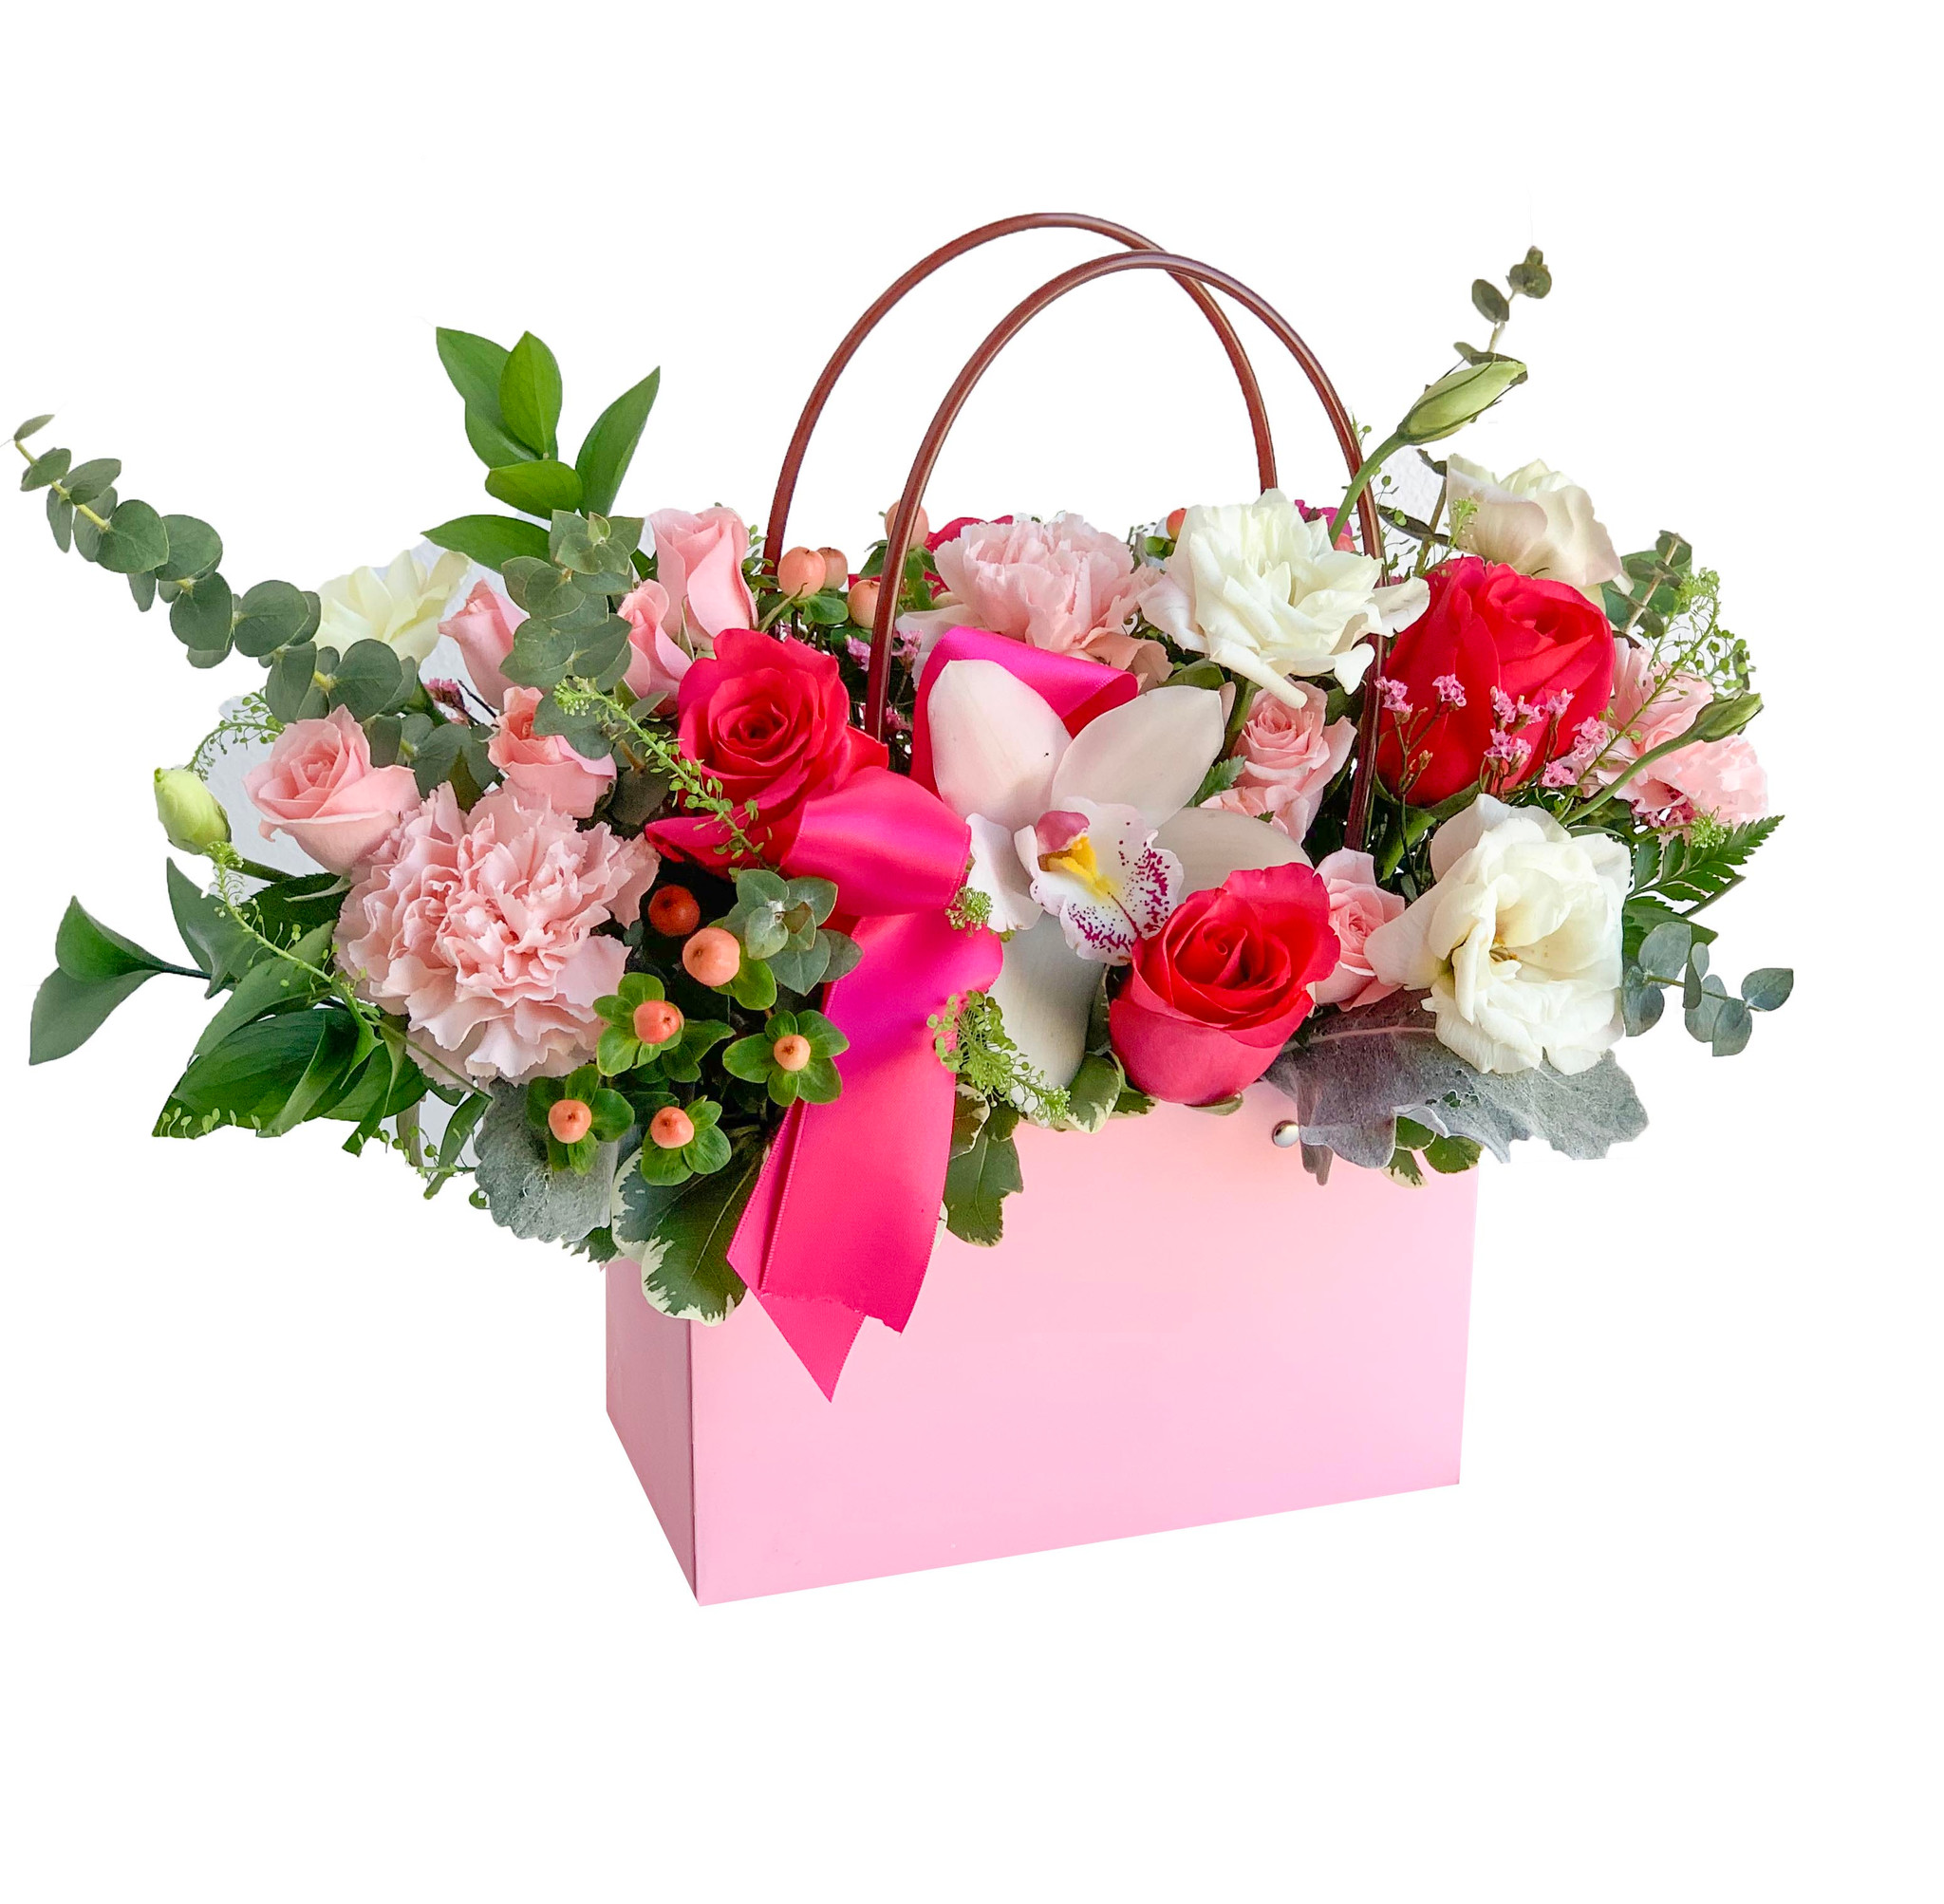 Buy DN Enterprises Stylish Handbag And Ladies Designer Purse For Women -  Rose Gold Online at Best Prices in India - JioMart.